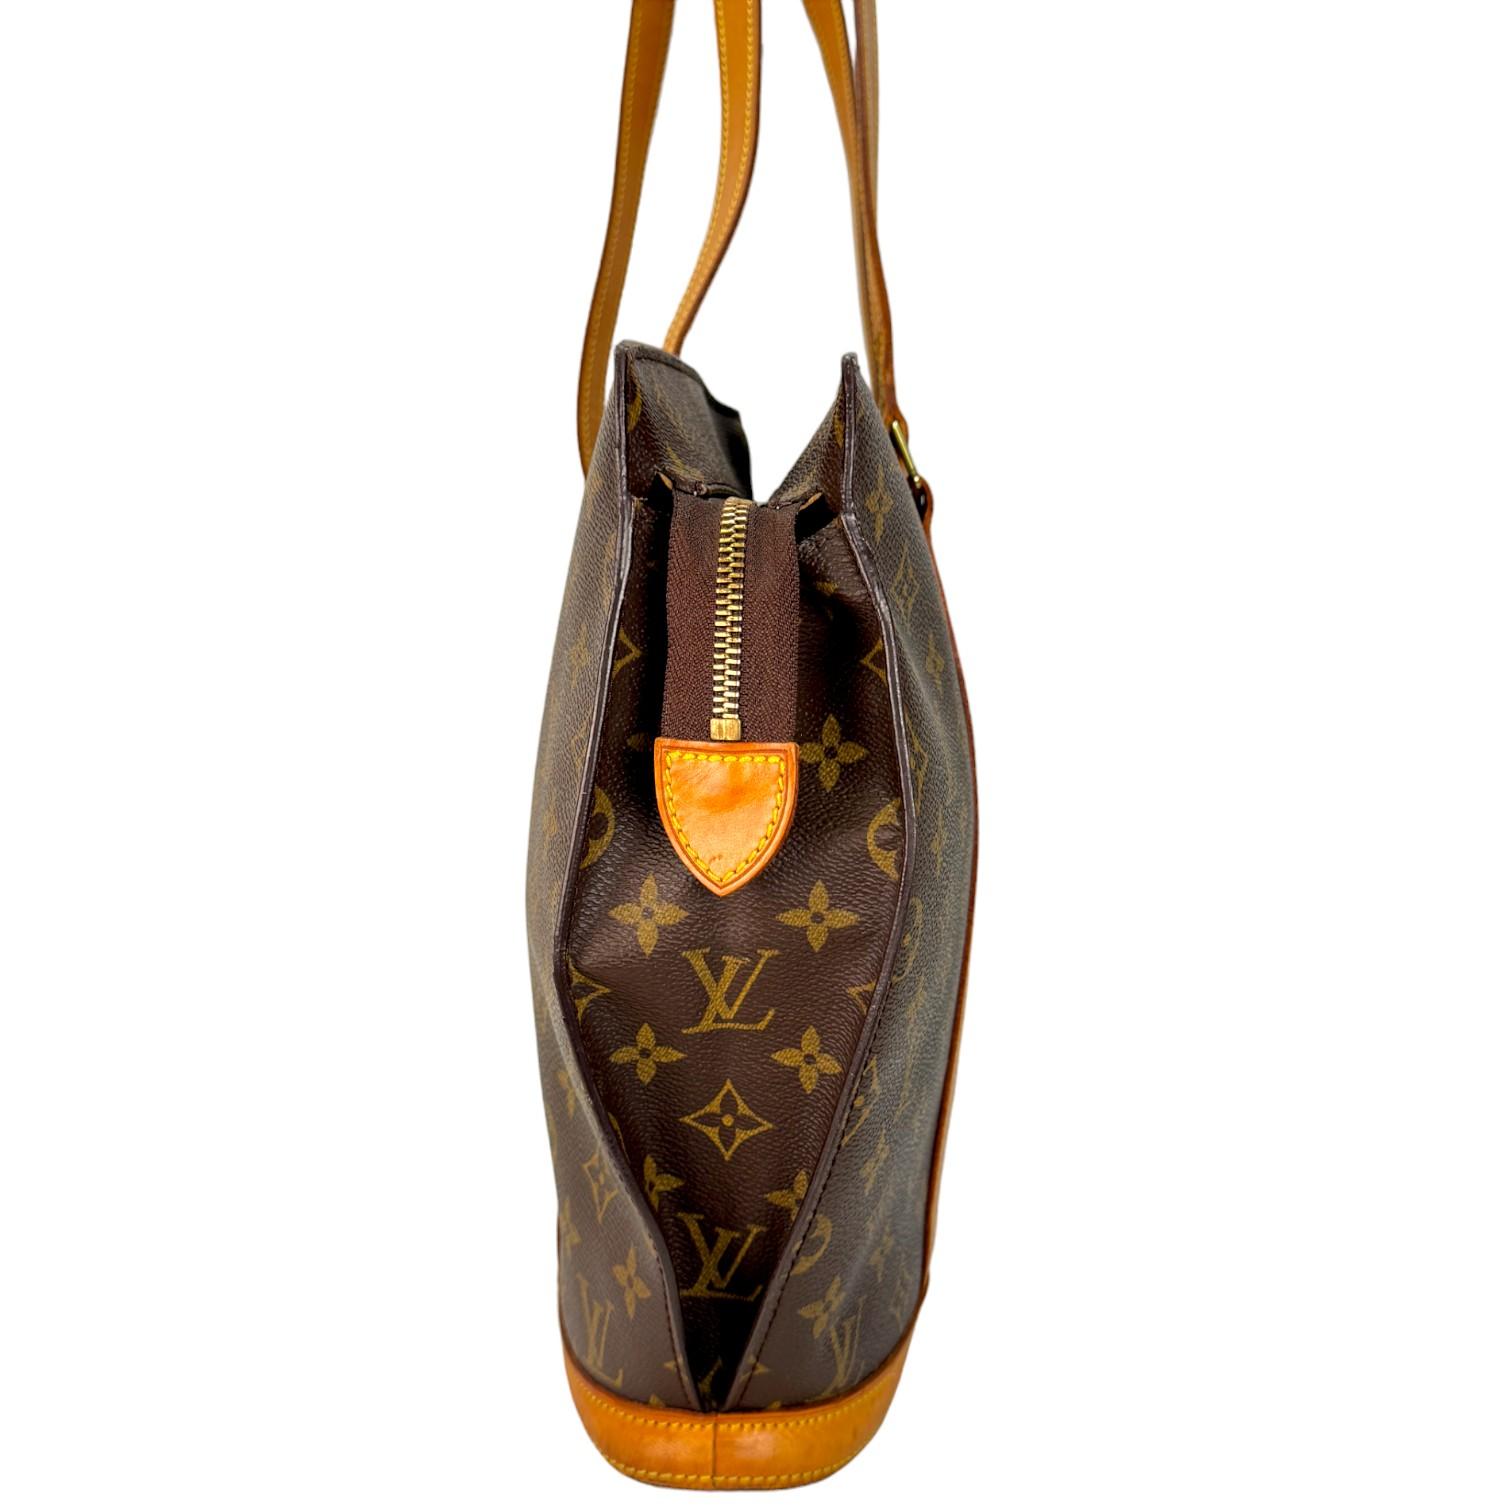 Authentic estate Louis Vuitton Monogram Babylone shoulder bag